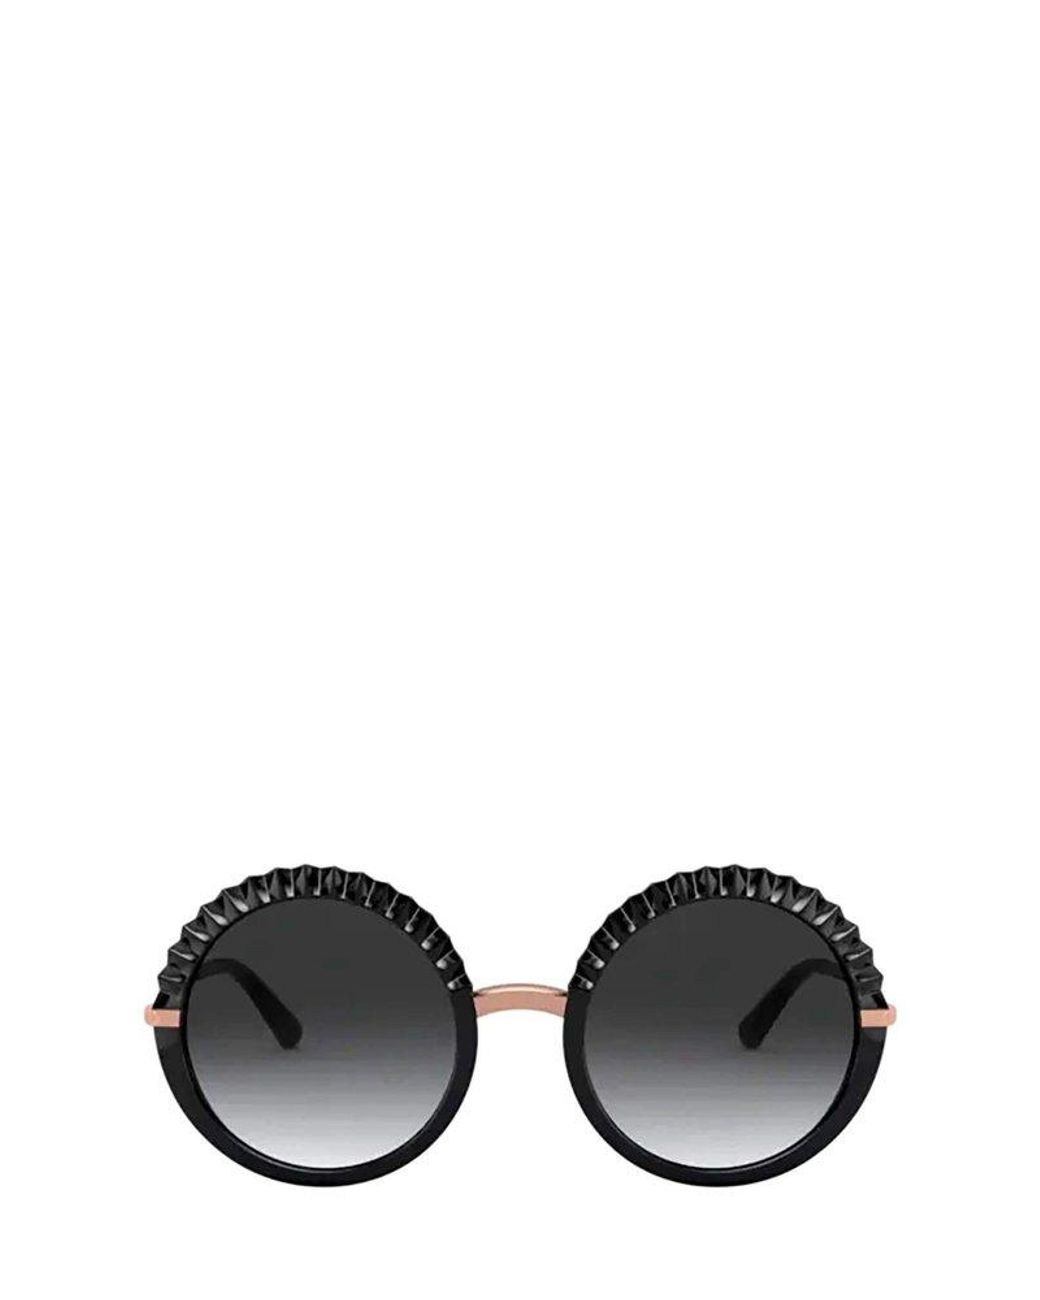 Dolce & Gabbana Round Sunglasses in Black | Lyst